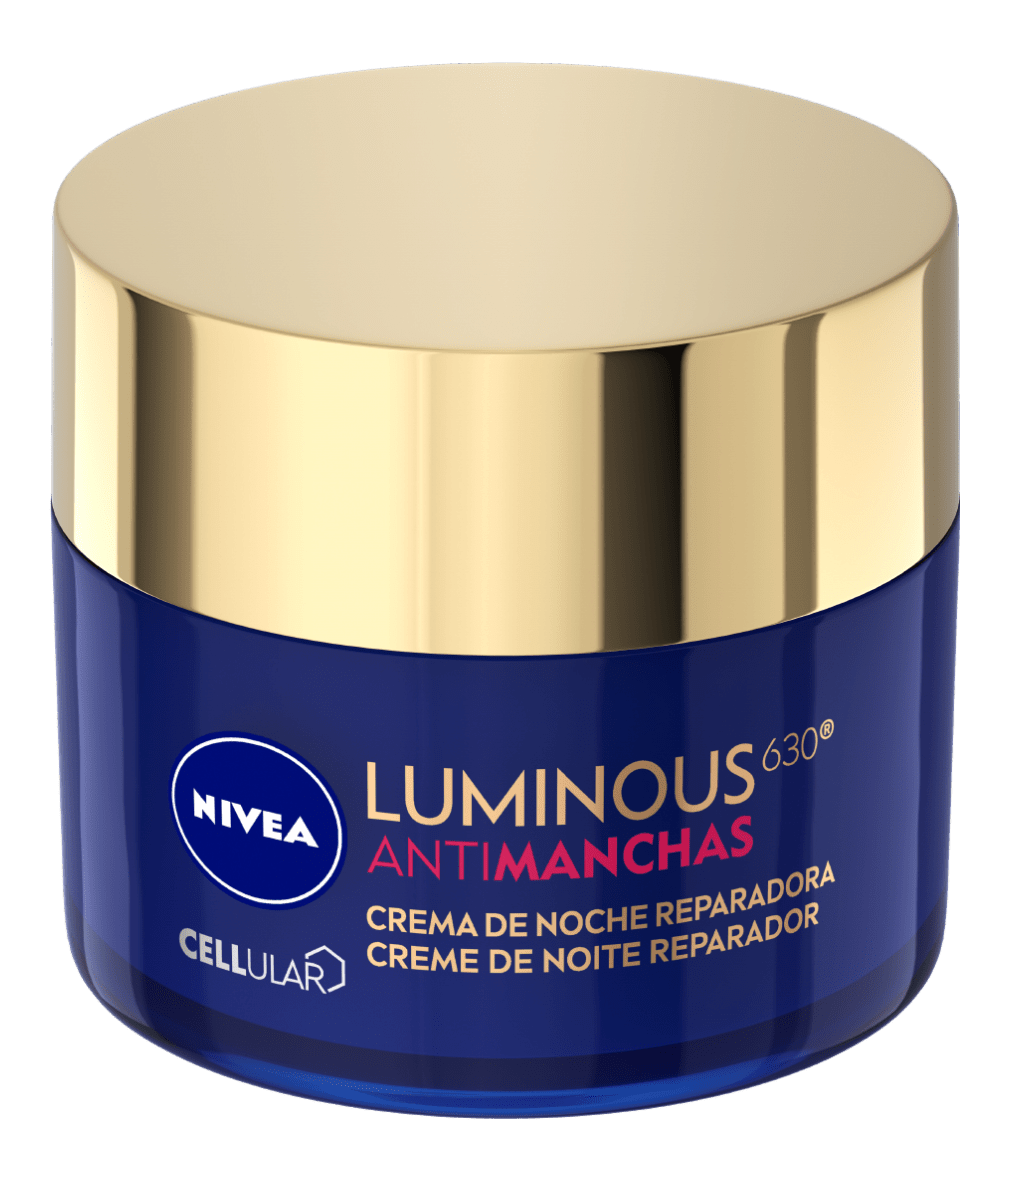 Luminous630 Antimanchas Crema de Noche Reparadora | NIVEA